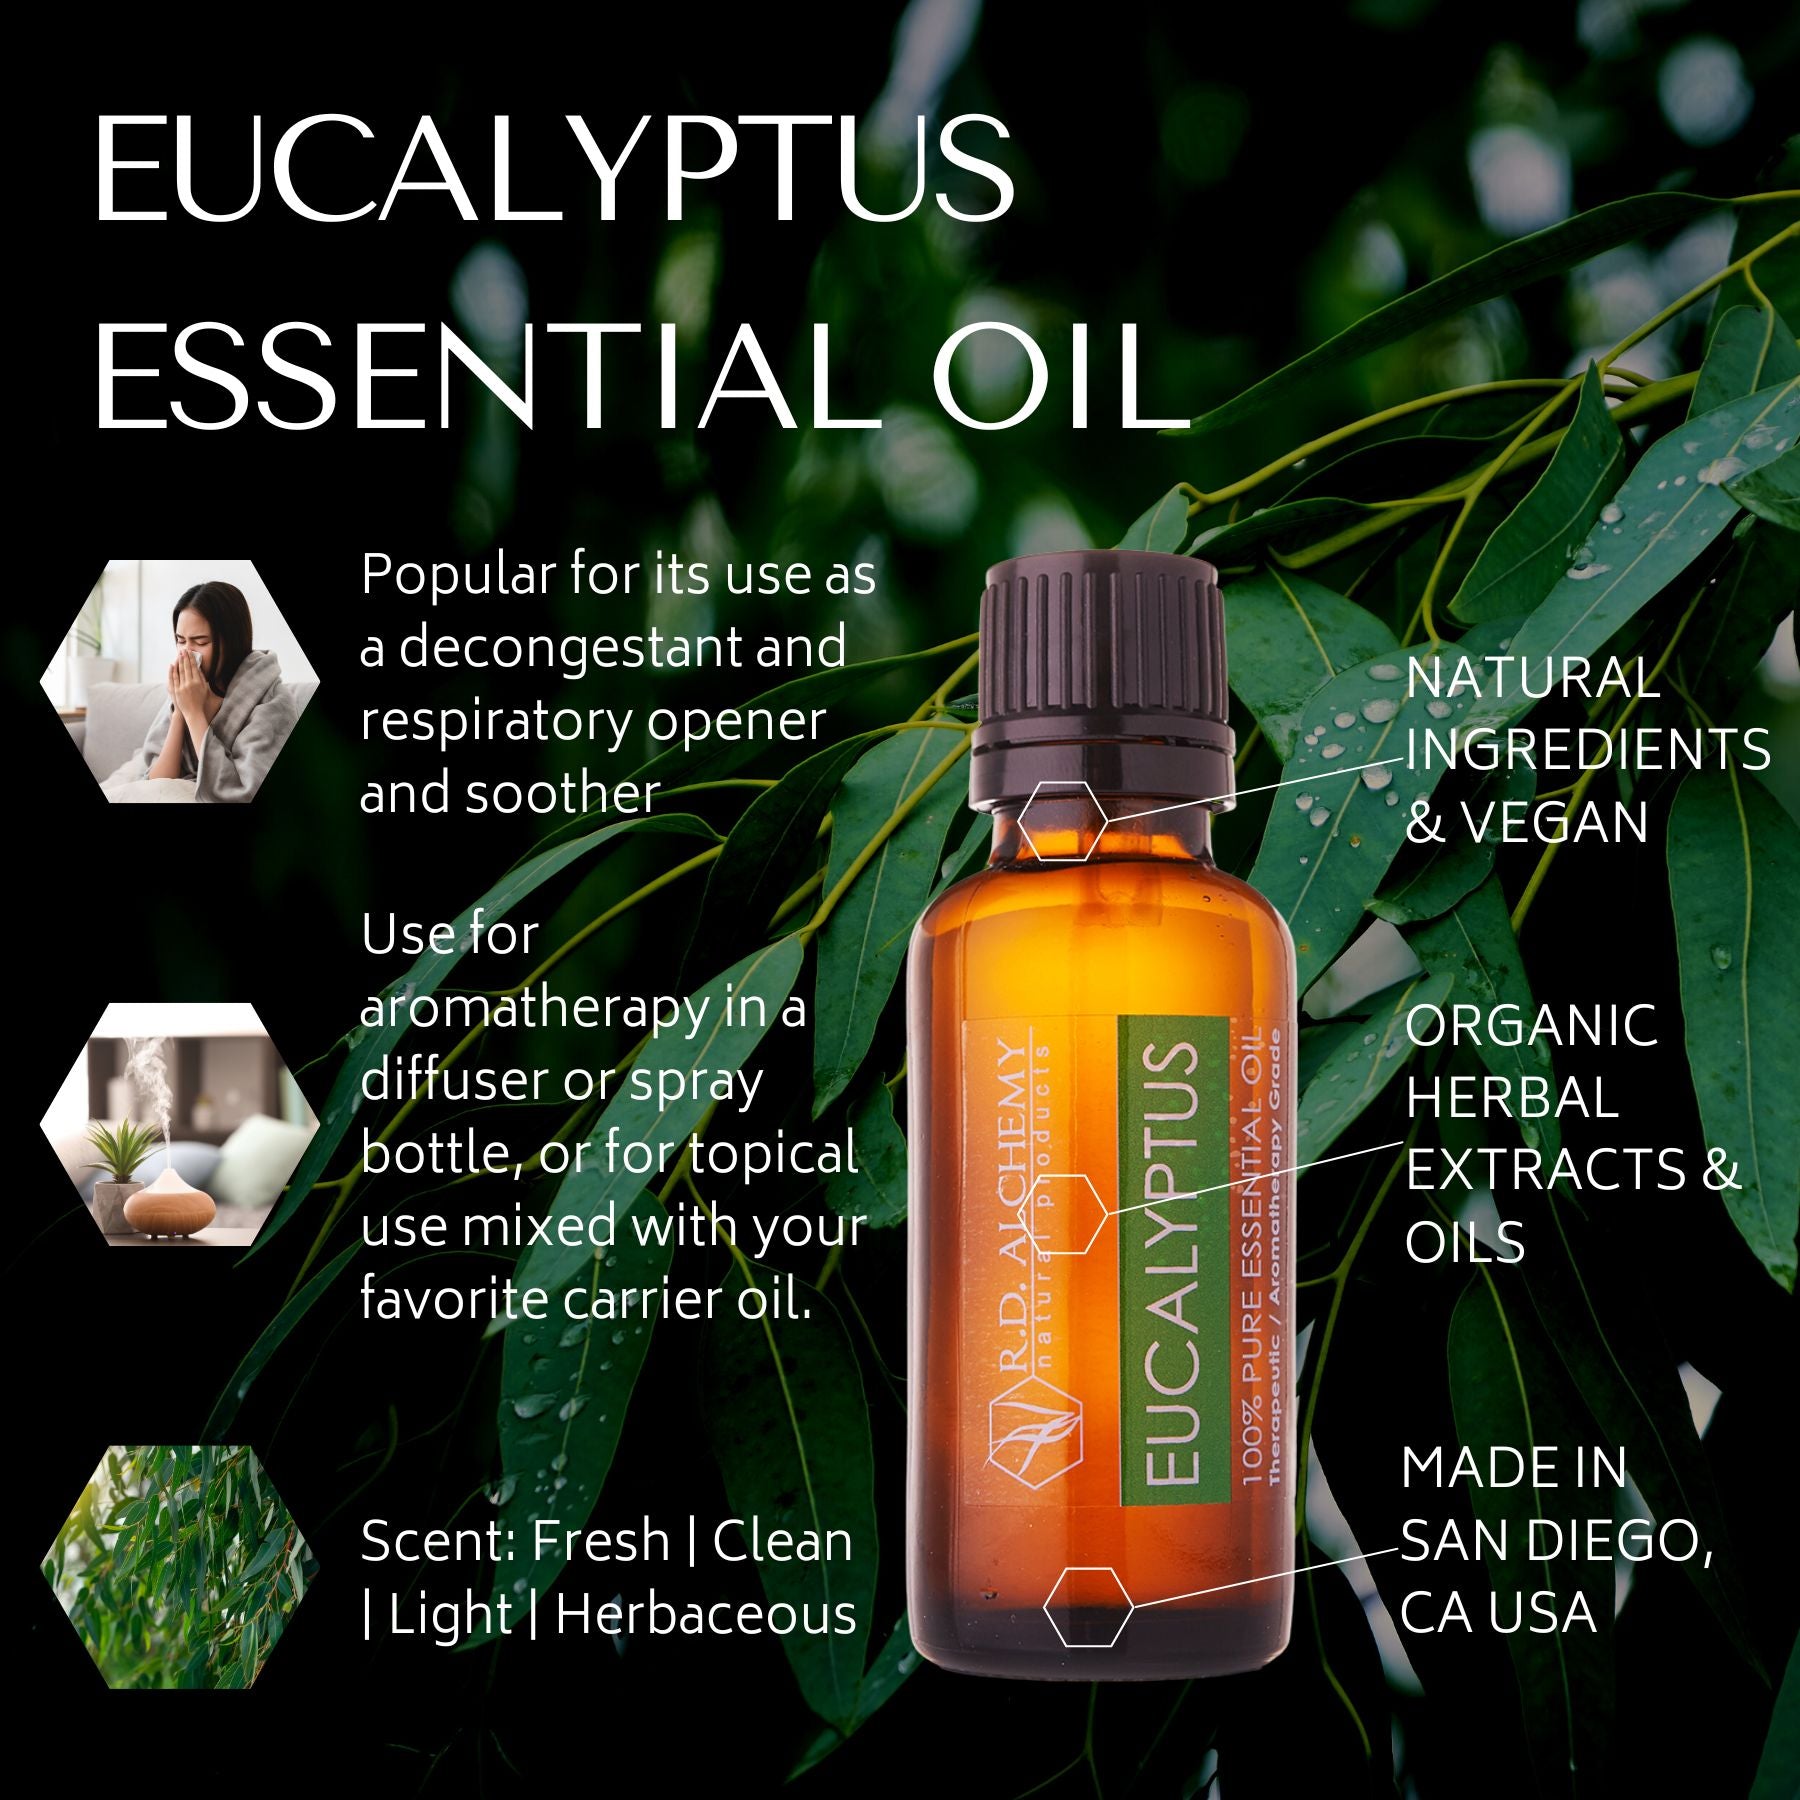 Eucalyptus Essential Oil Uses and Benefits - Holistic Oils